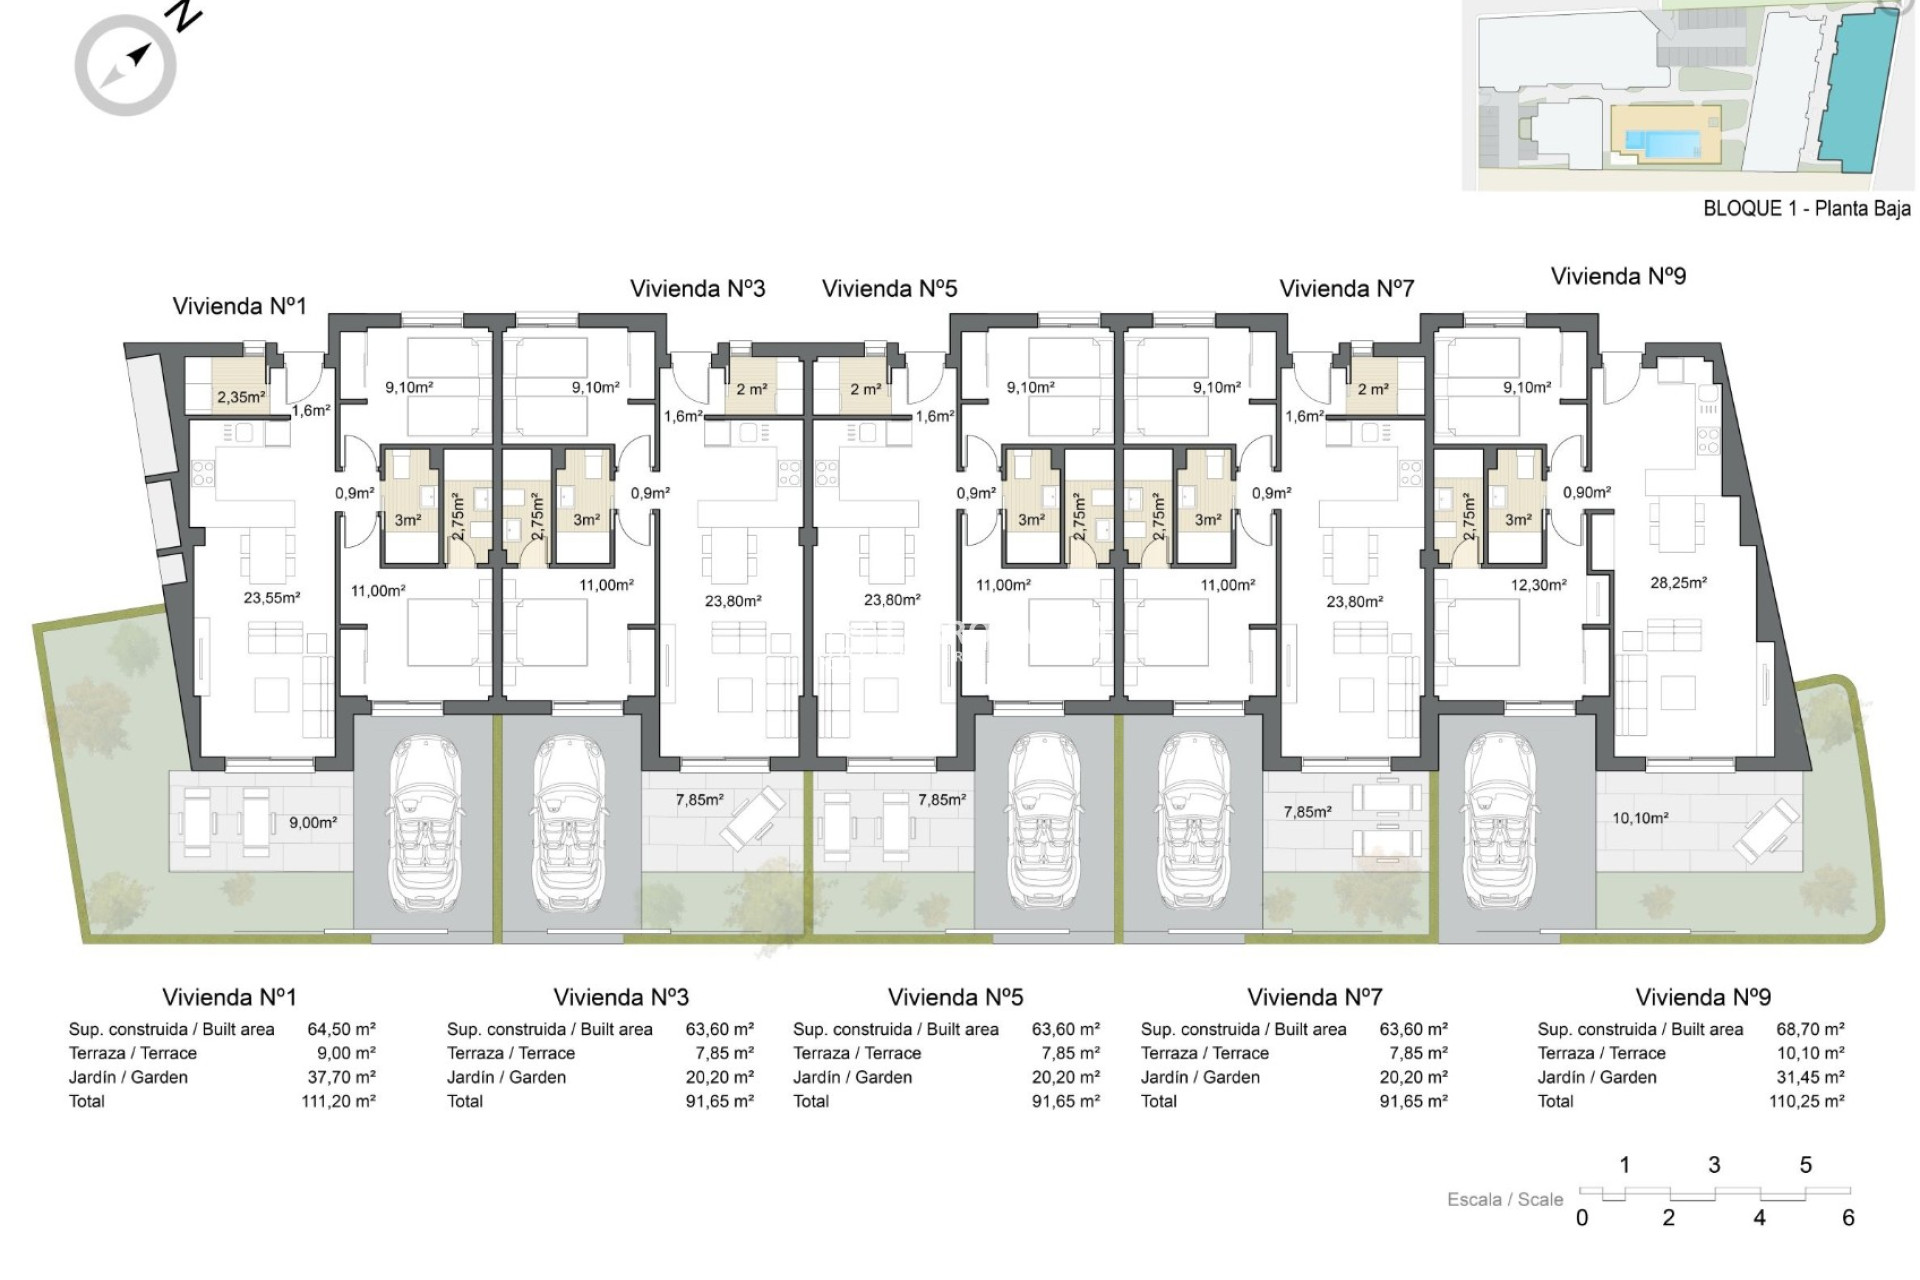 Ground floor apartments plan